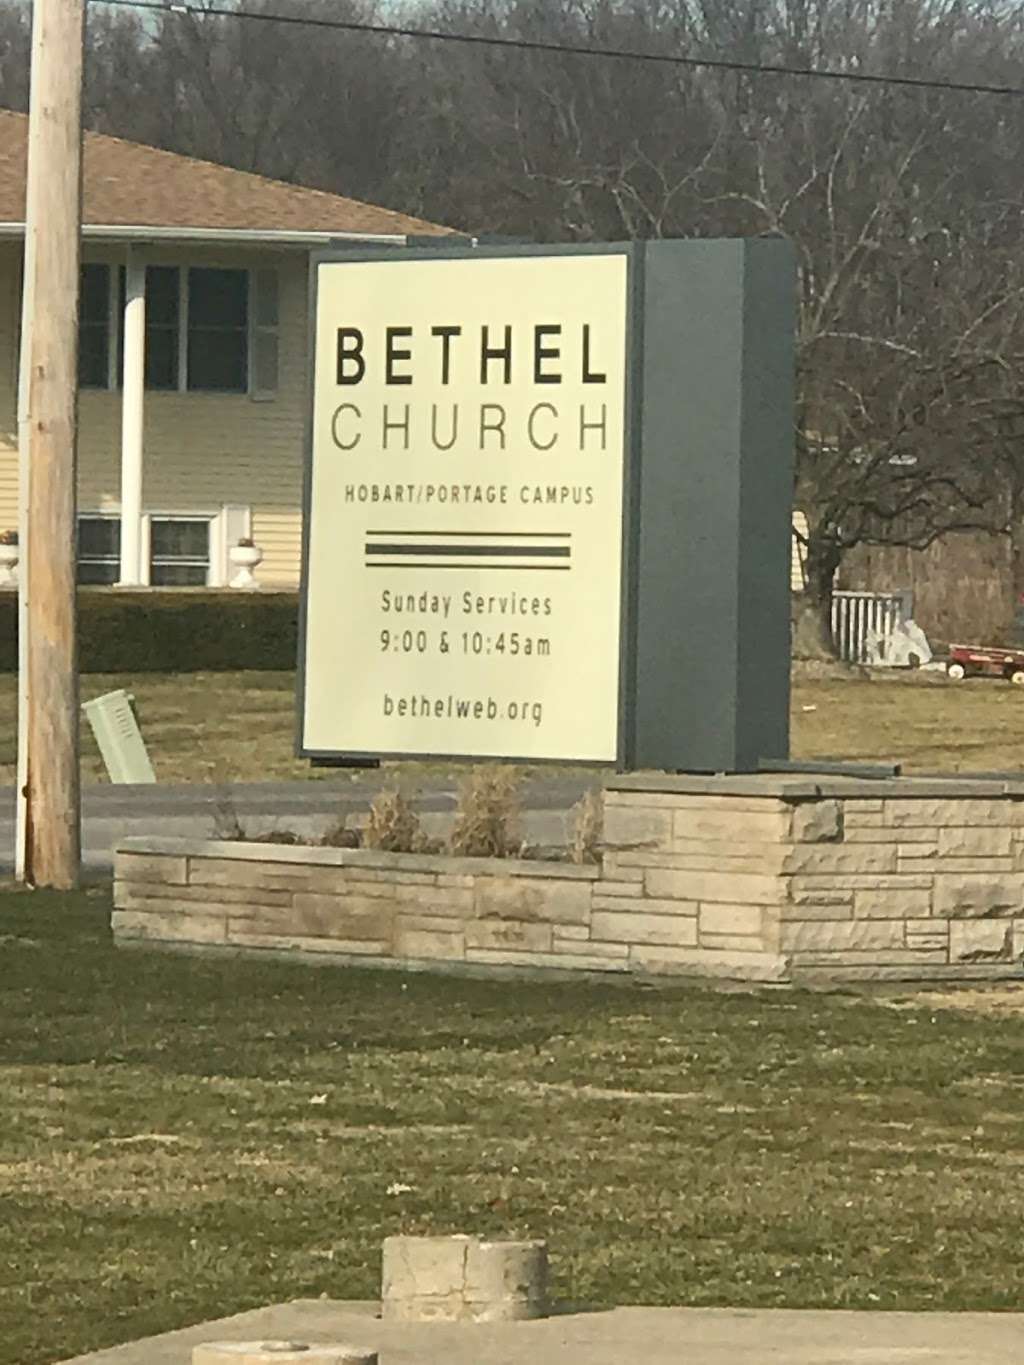 Bethel Church Hobart/Portage | 704 W 700 N, Hobart, IN 46342 | Phone: (219) 663-9200